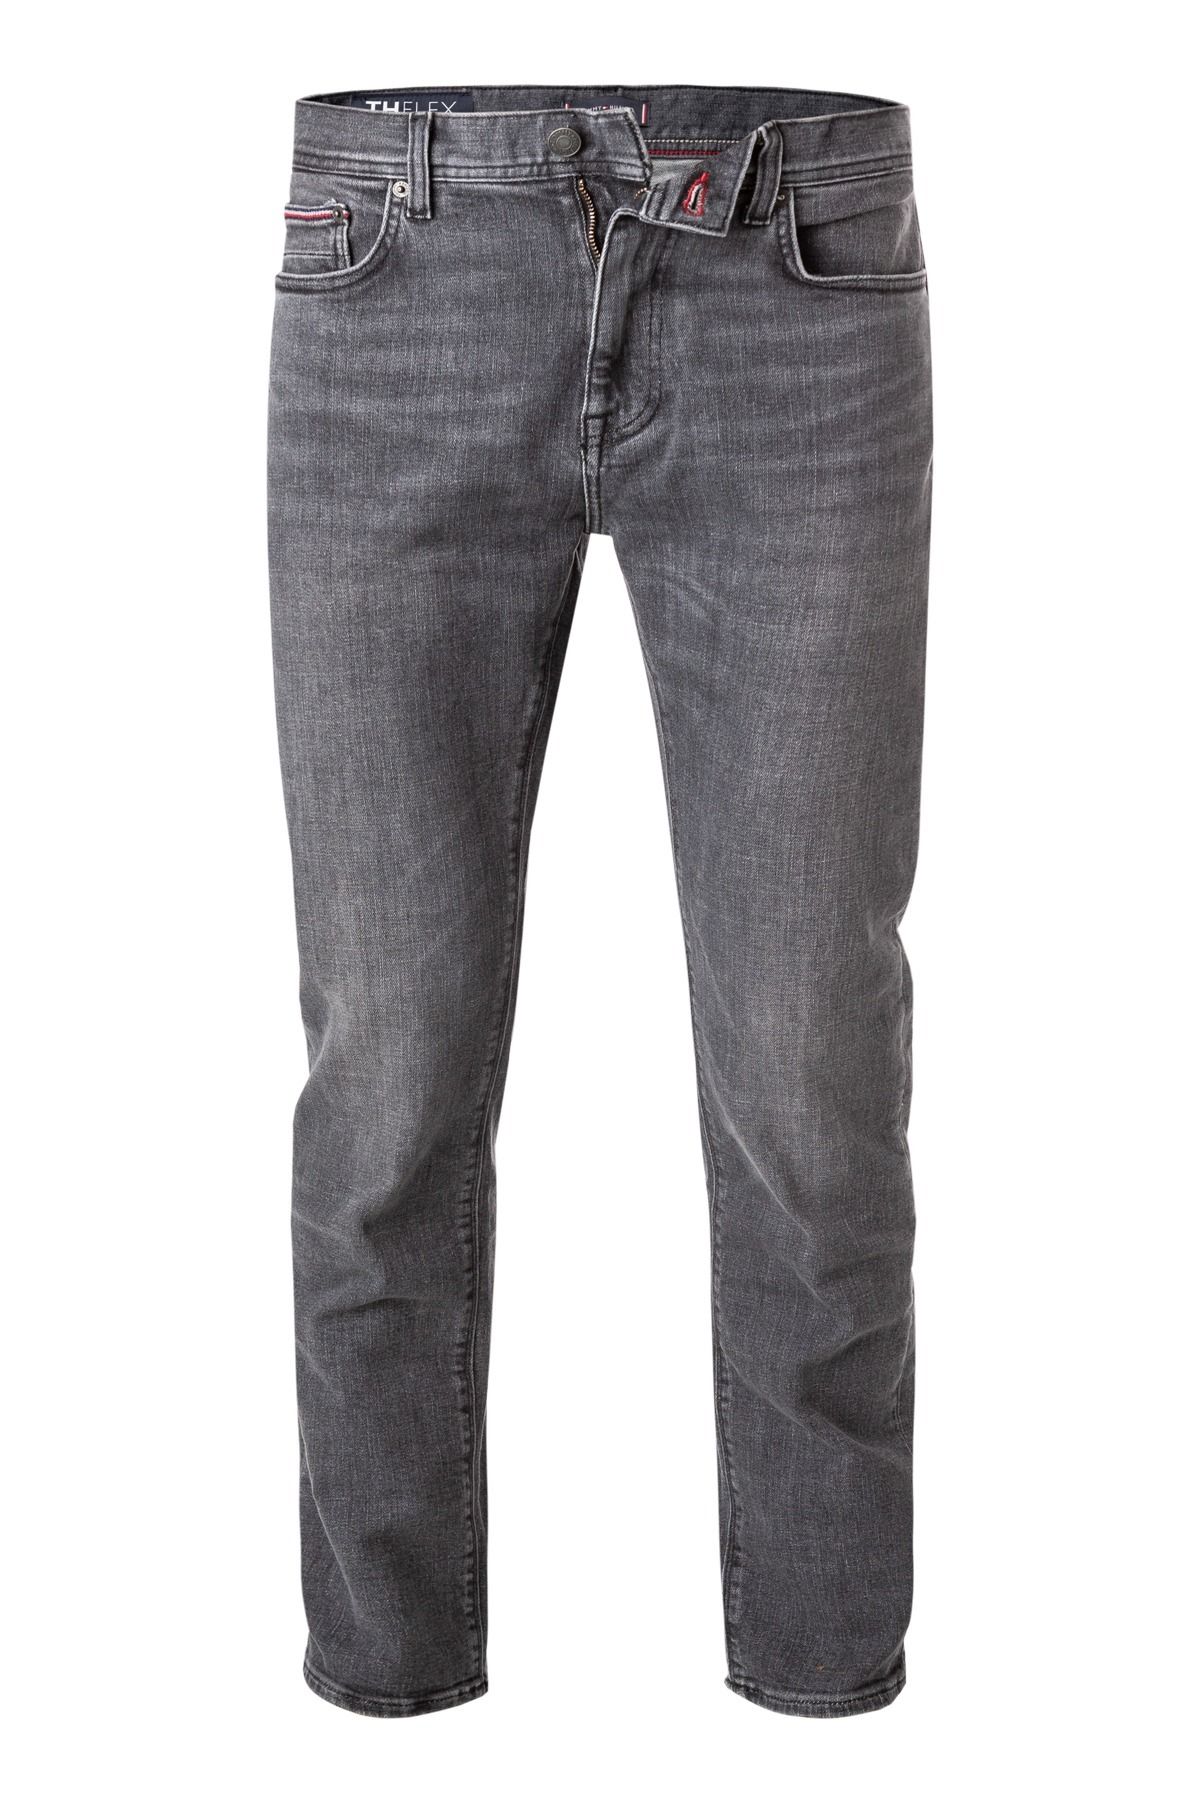 Tommy Hilfiger Erkek Denim Normal Belli Düz Model Günlük Kullanım Gri Jeans MW0MW33965-1B4